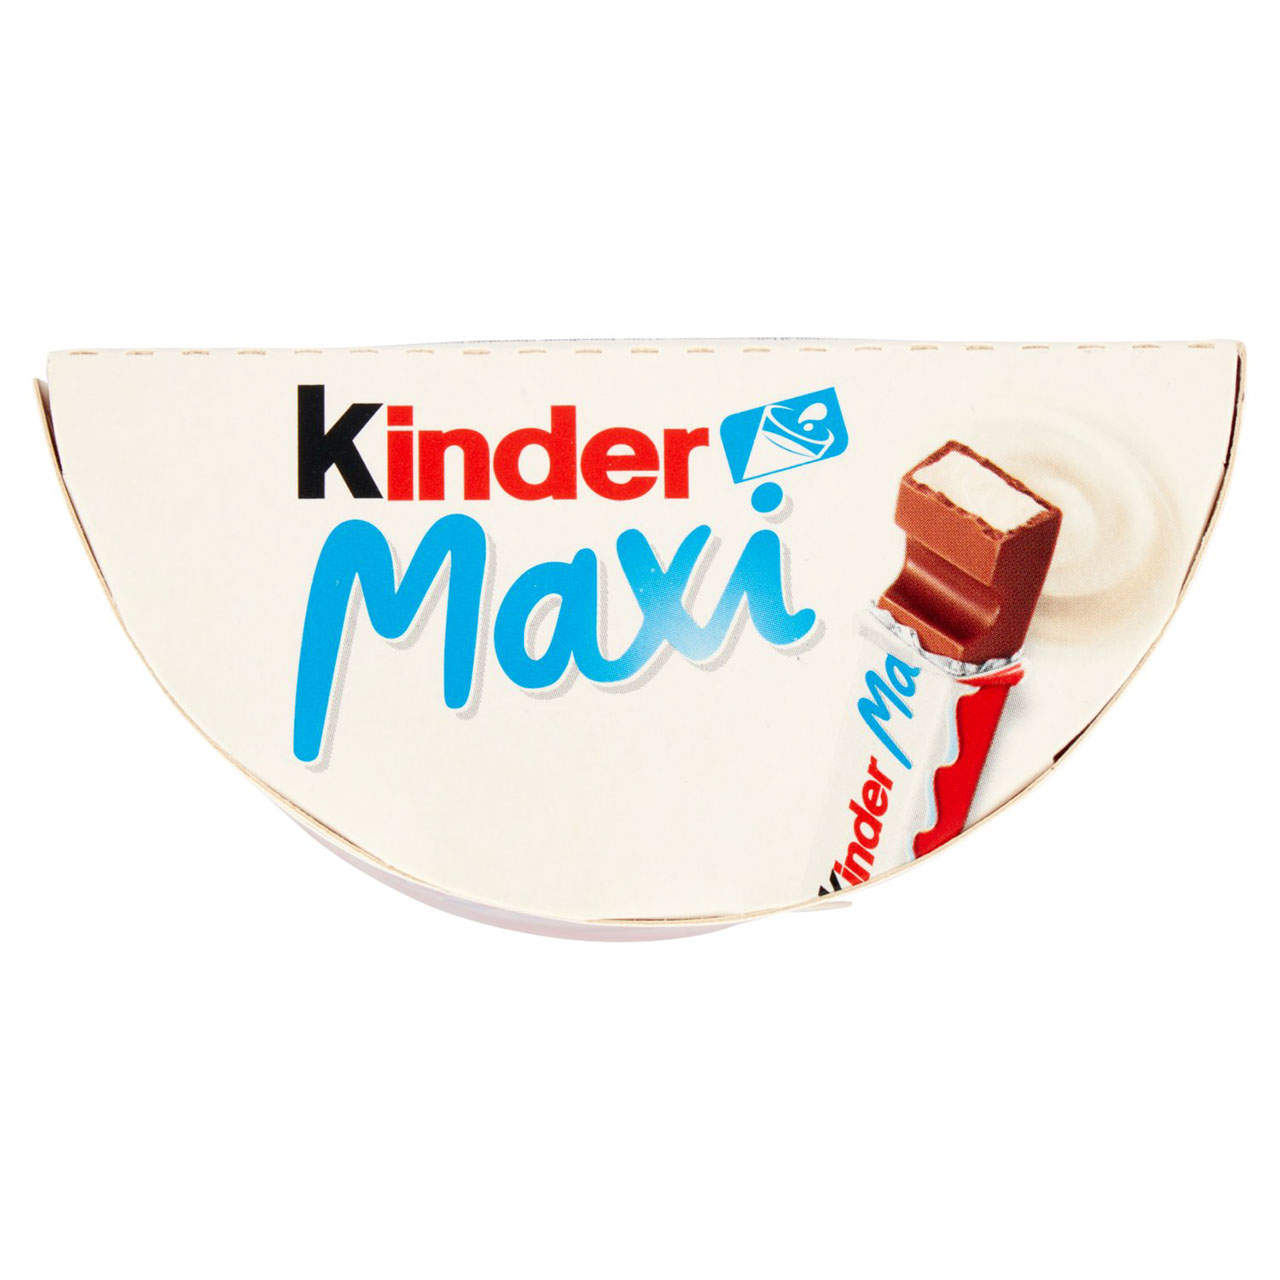 Kinder Maxi 10 x 21 g in vendita online